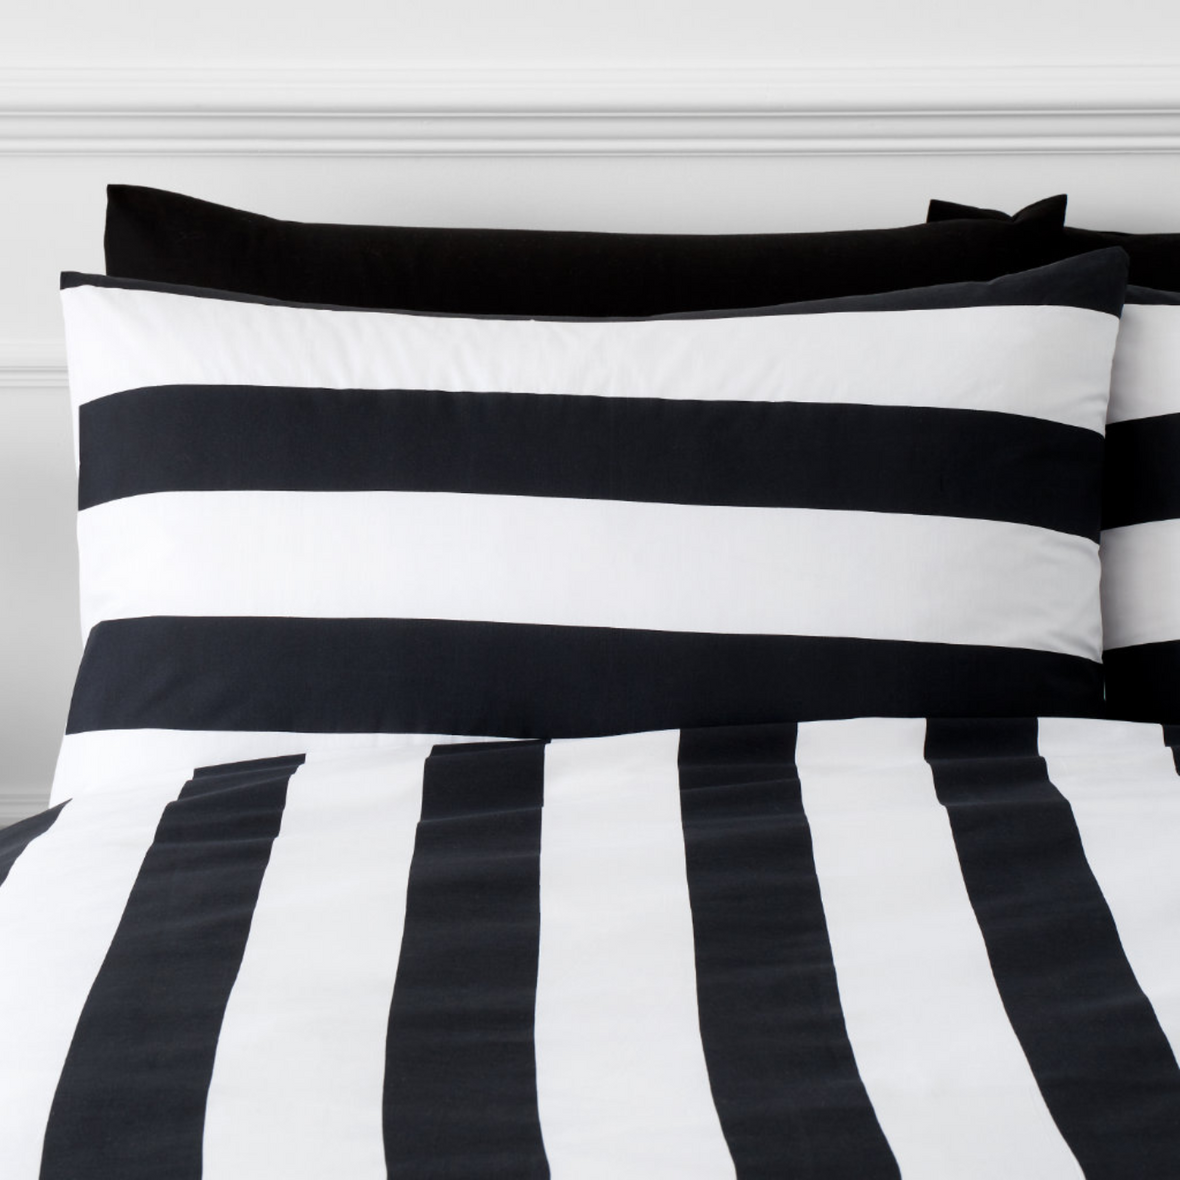 Bold Stripe Black White Duvet Set